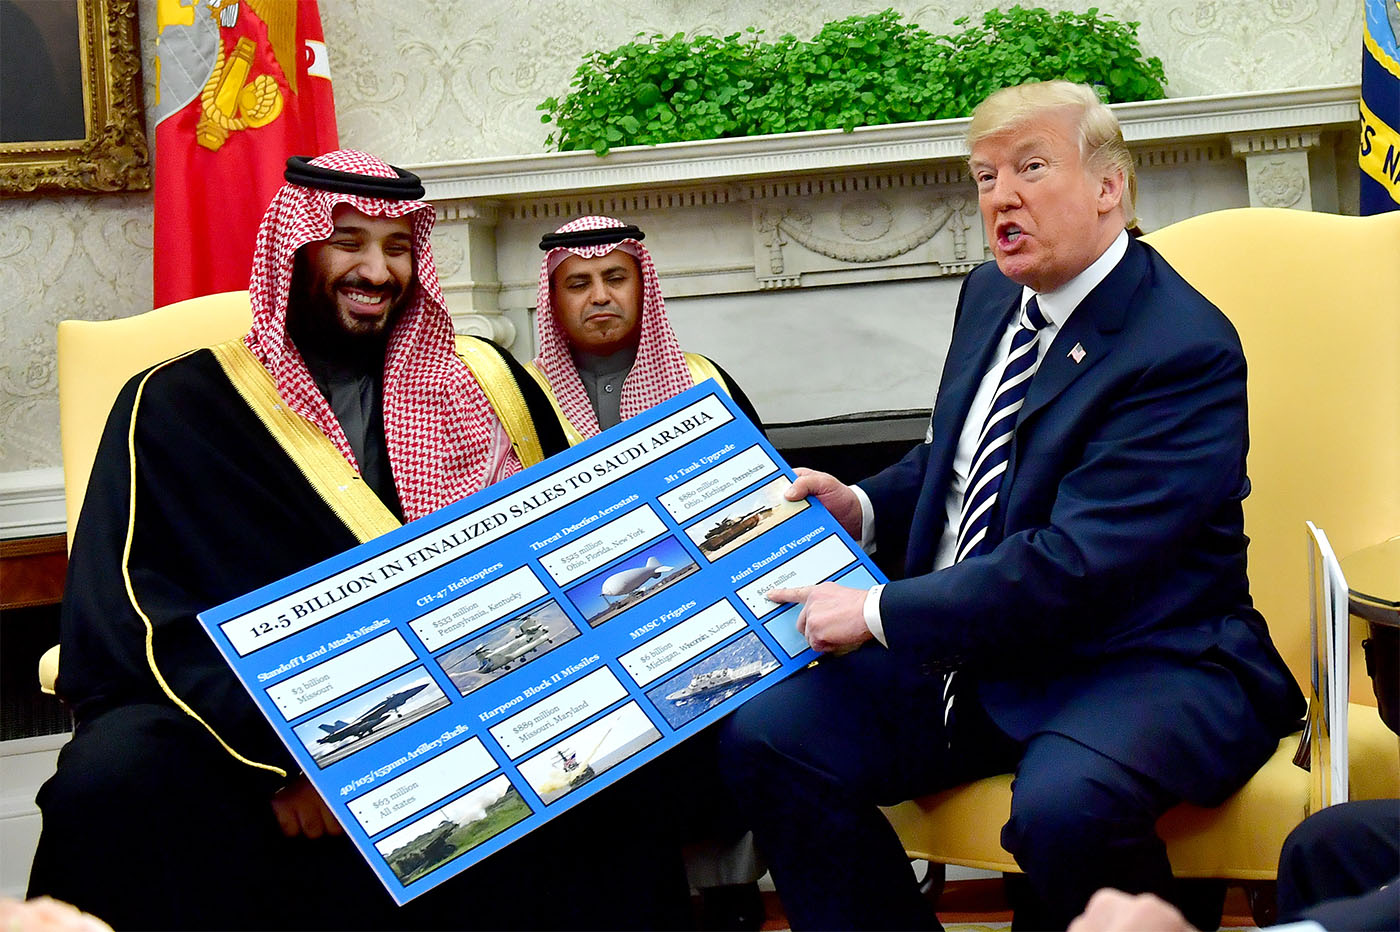 Trump signed a $110 billion arms deal package with Riyadh last year